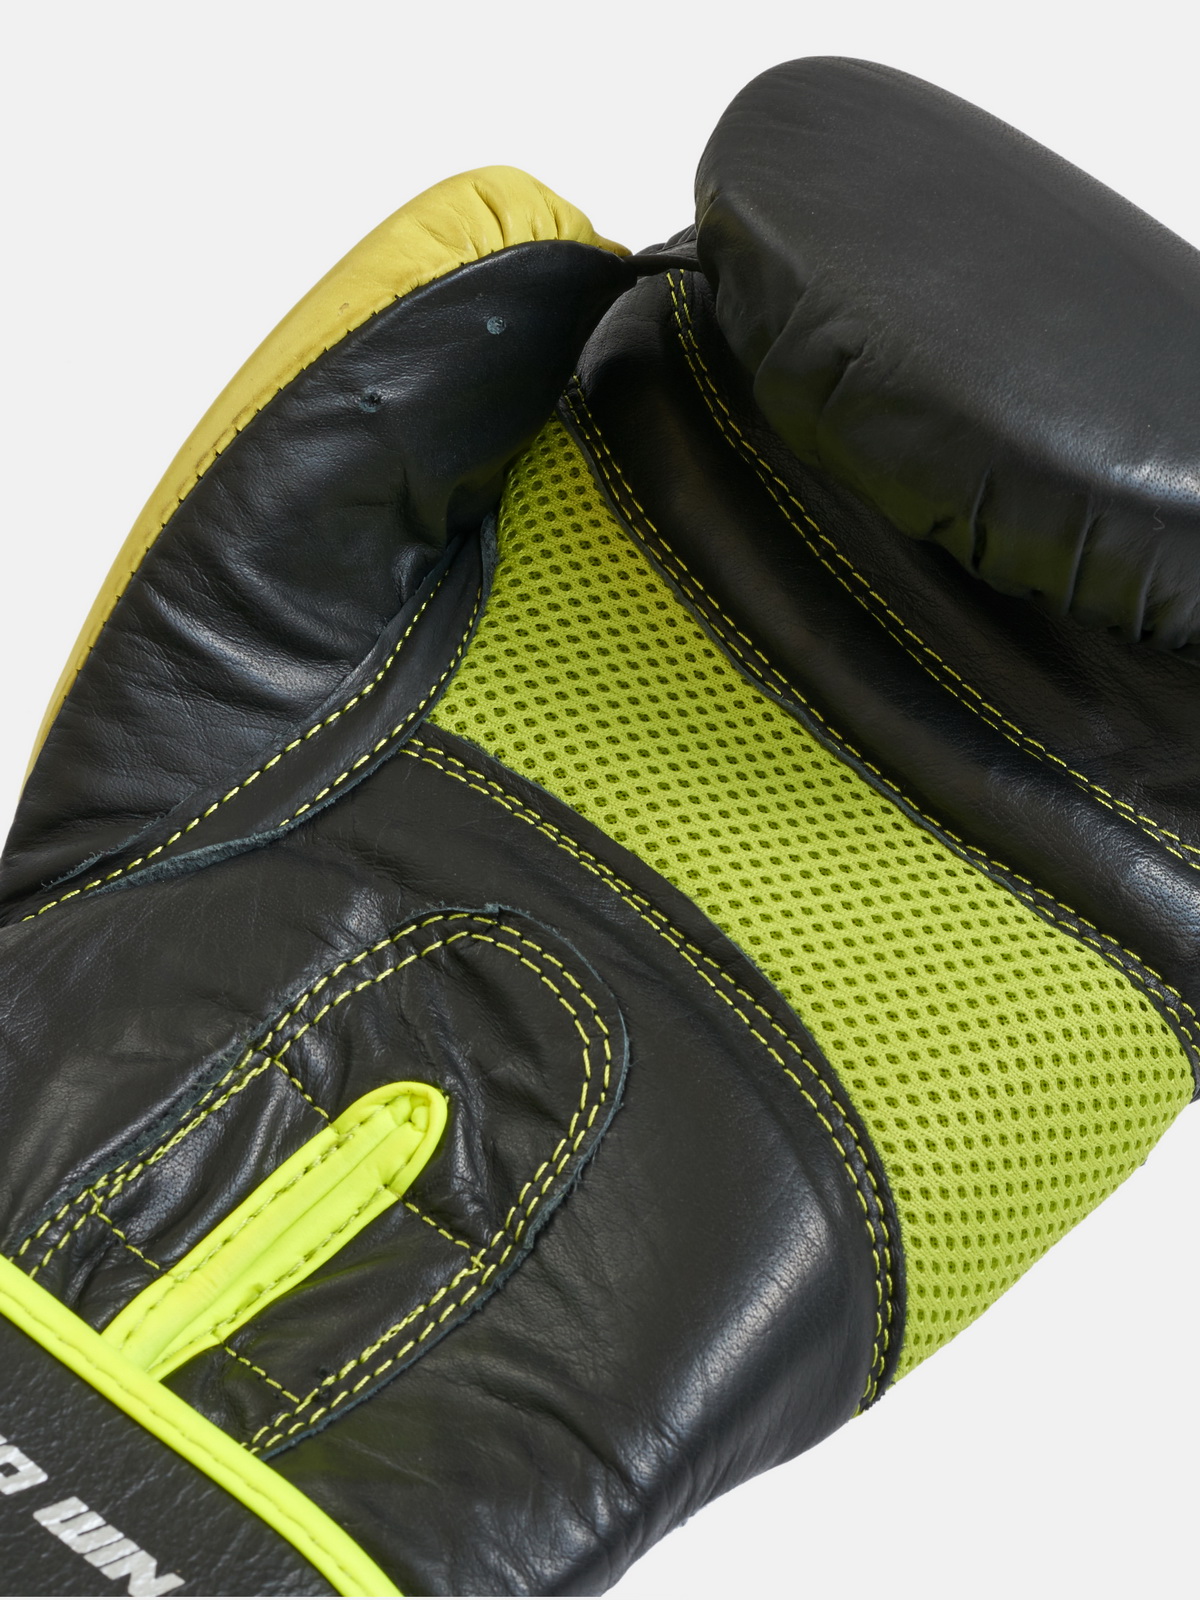 Peresvit Fusion Boxing Gloves, Photo No. 4